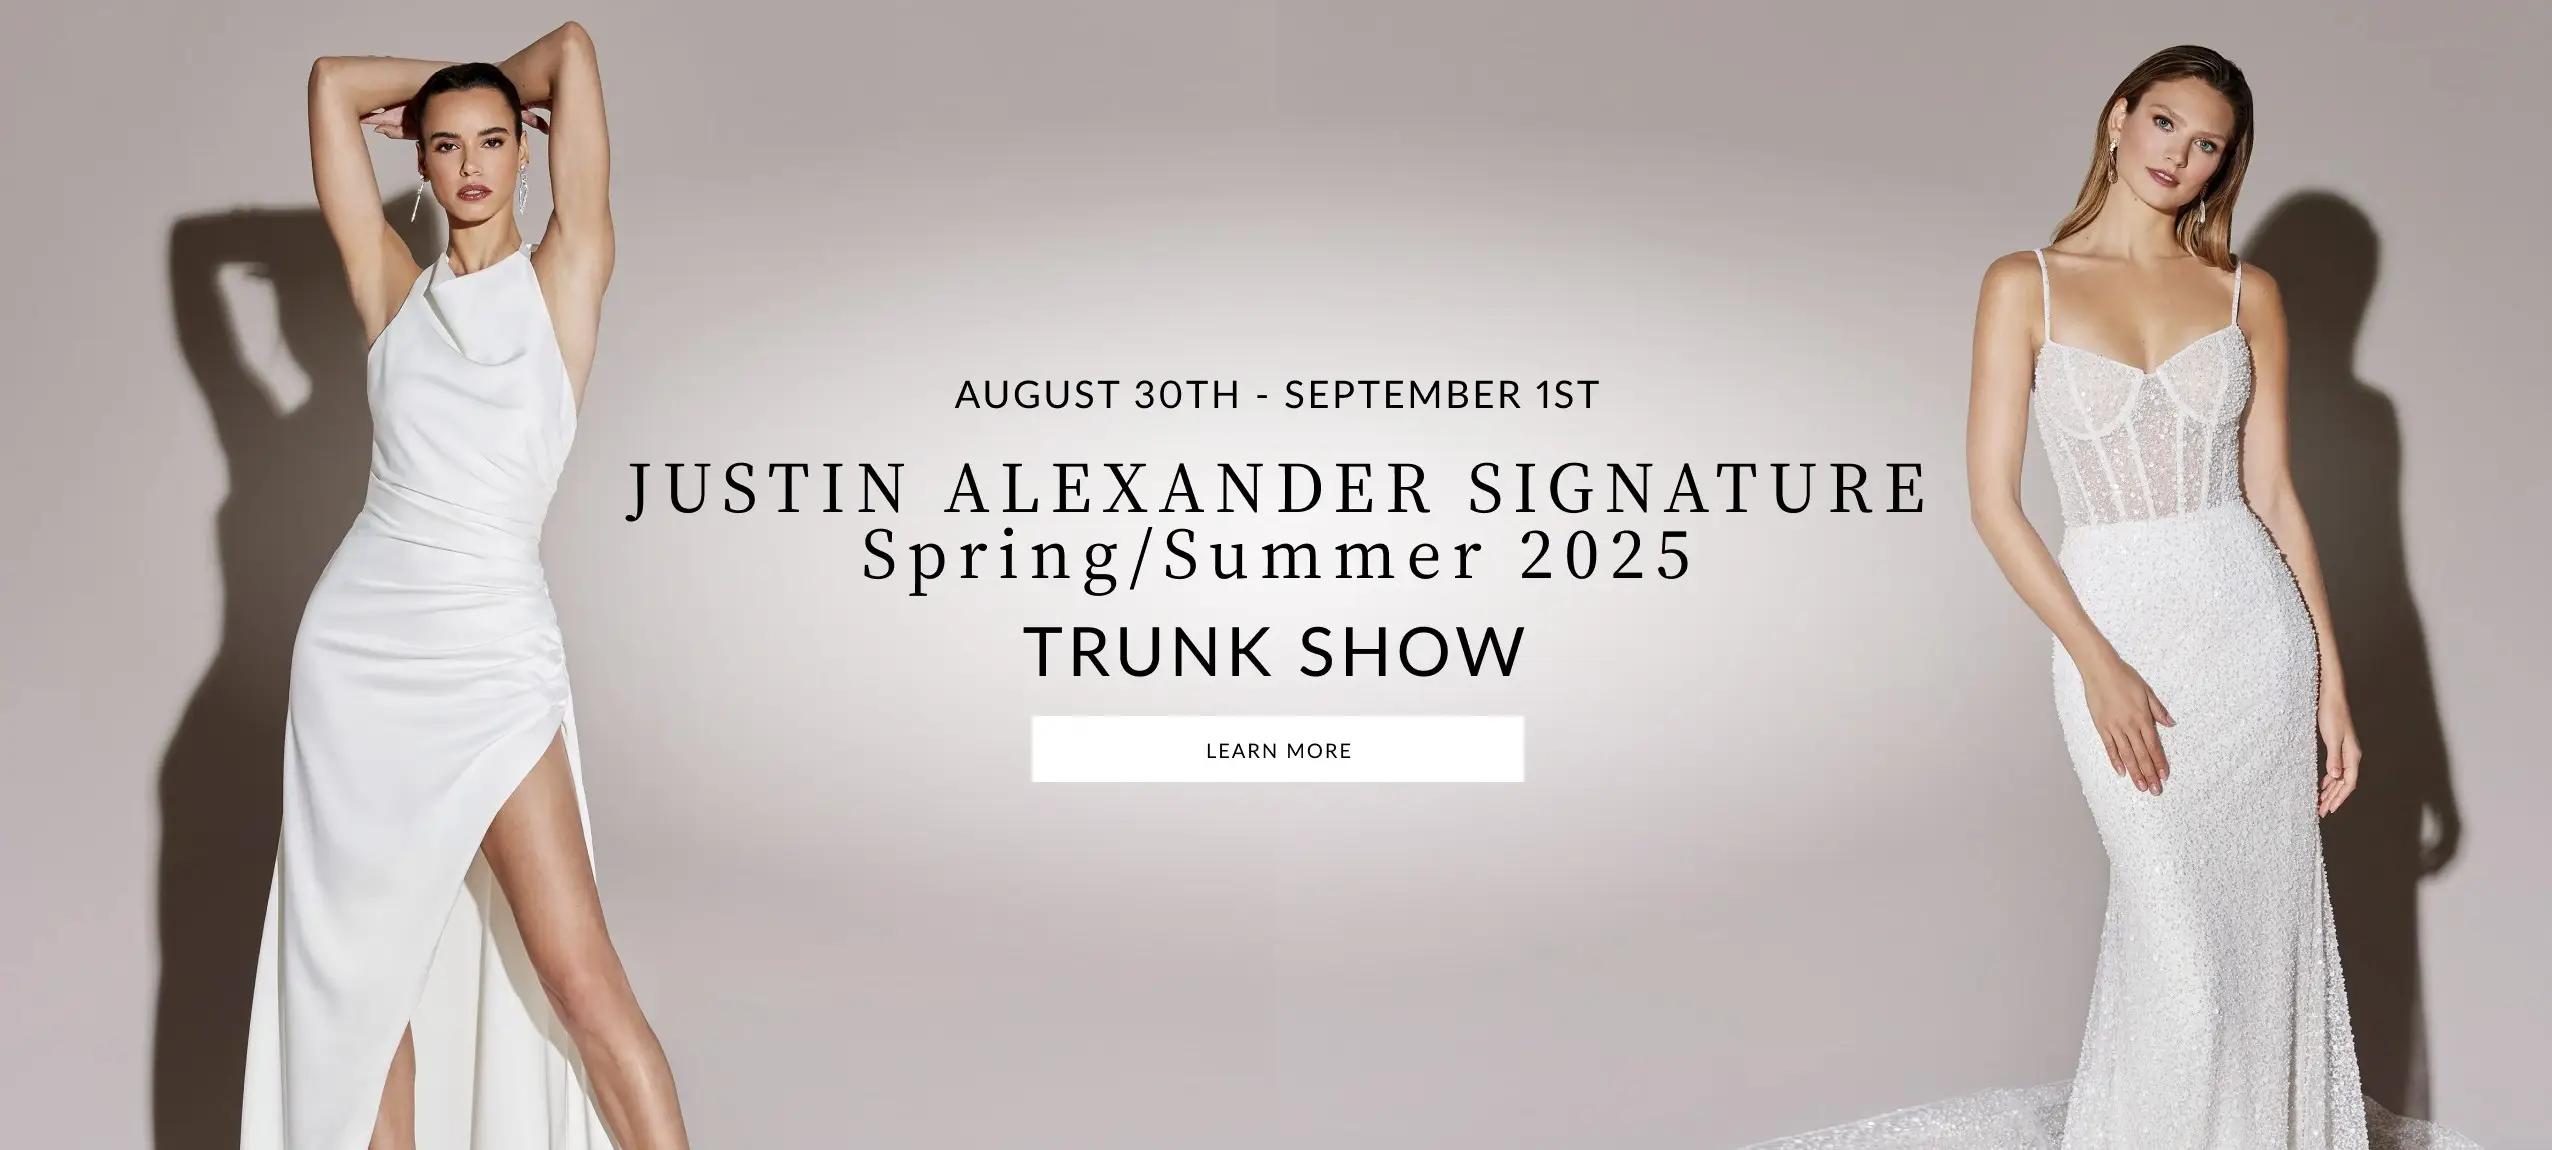 Spring/Summer 2025 Justin Alexander Signature Trunk Show